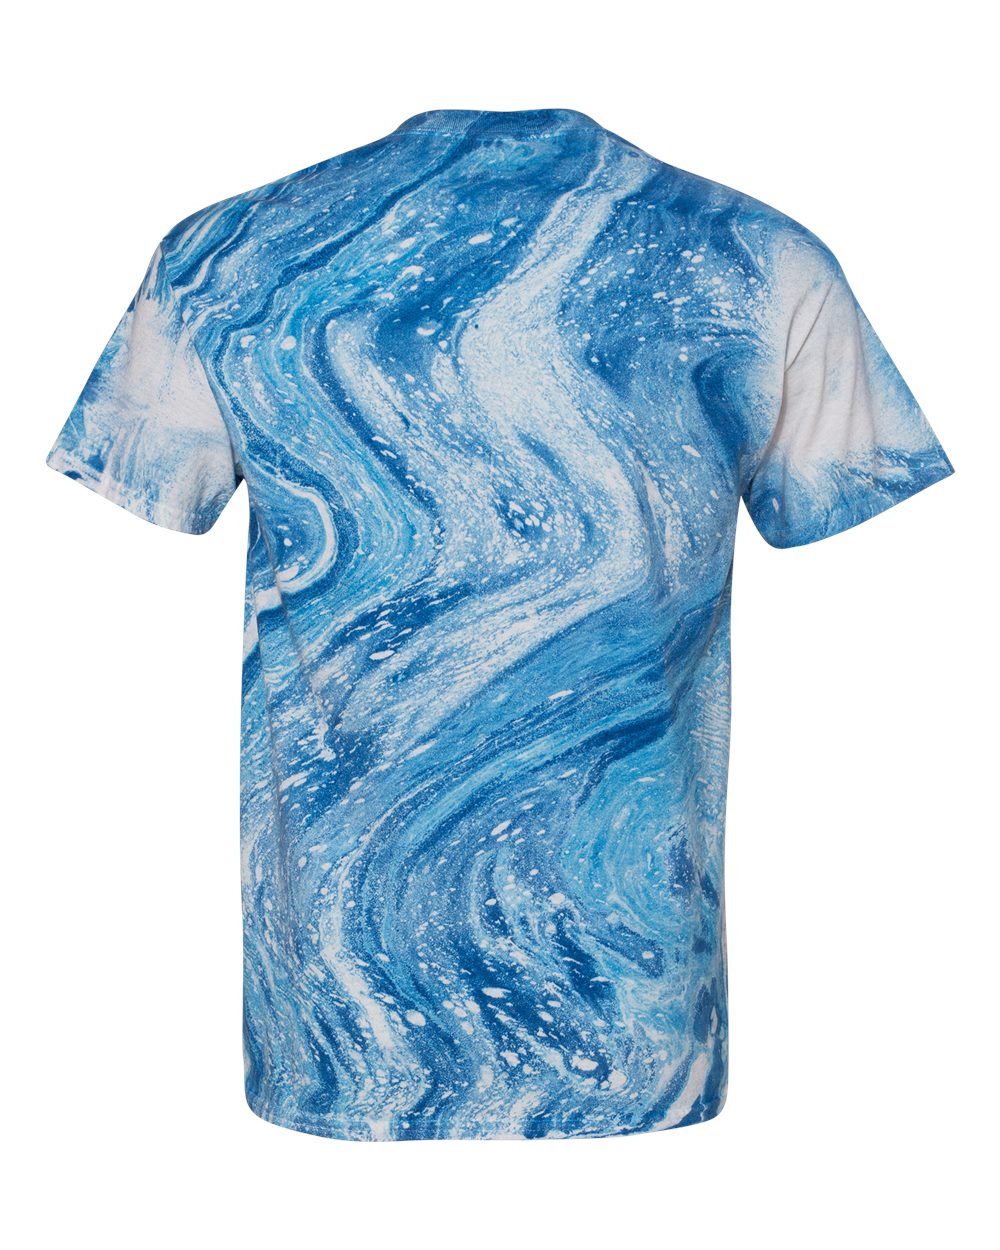 Marble Tie Dye T-Shirt - 200MR-